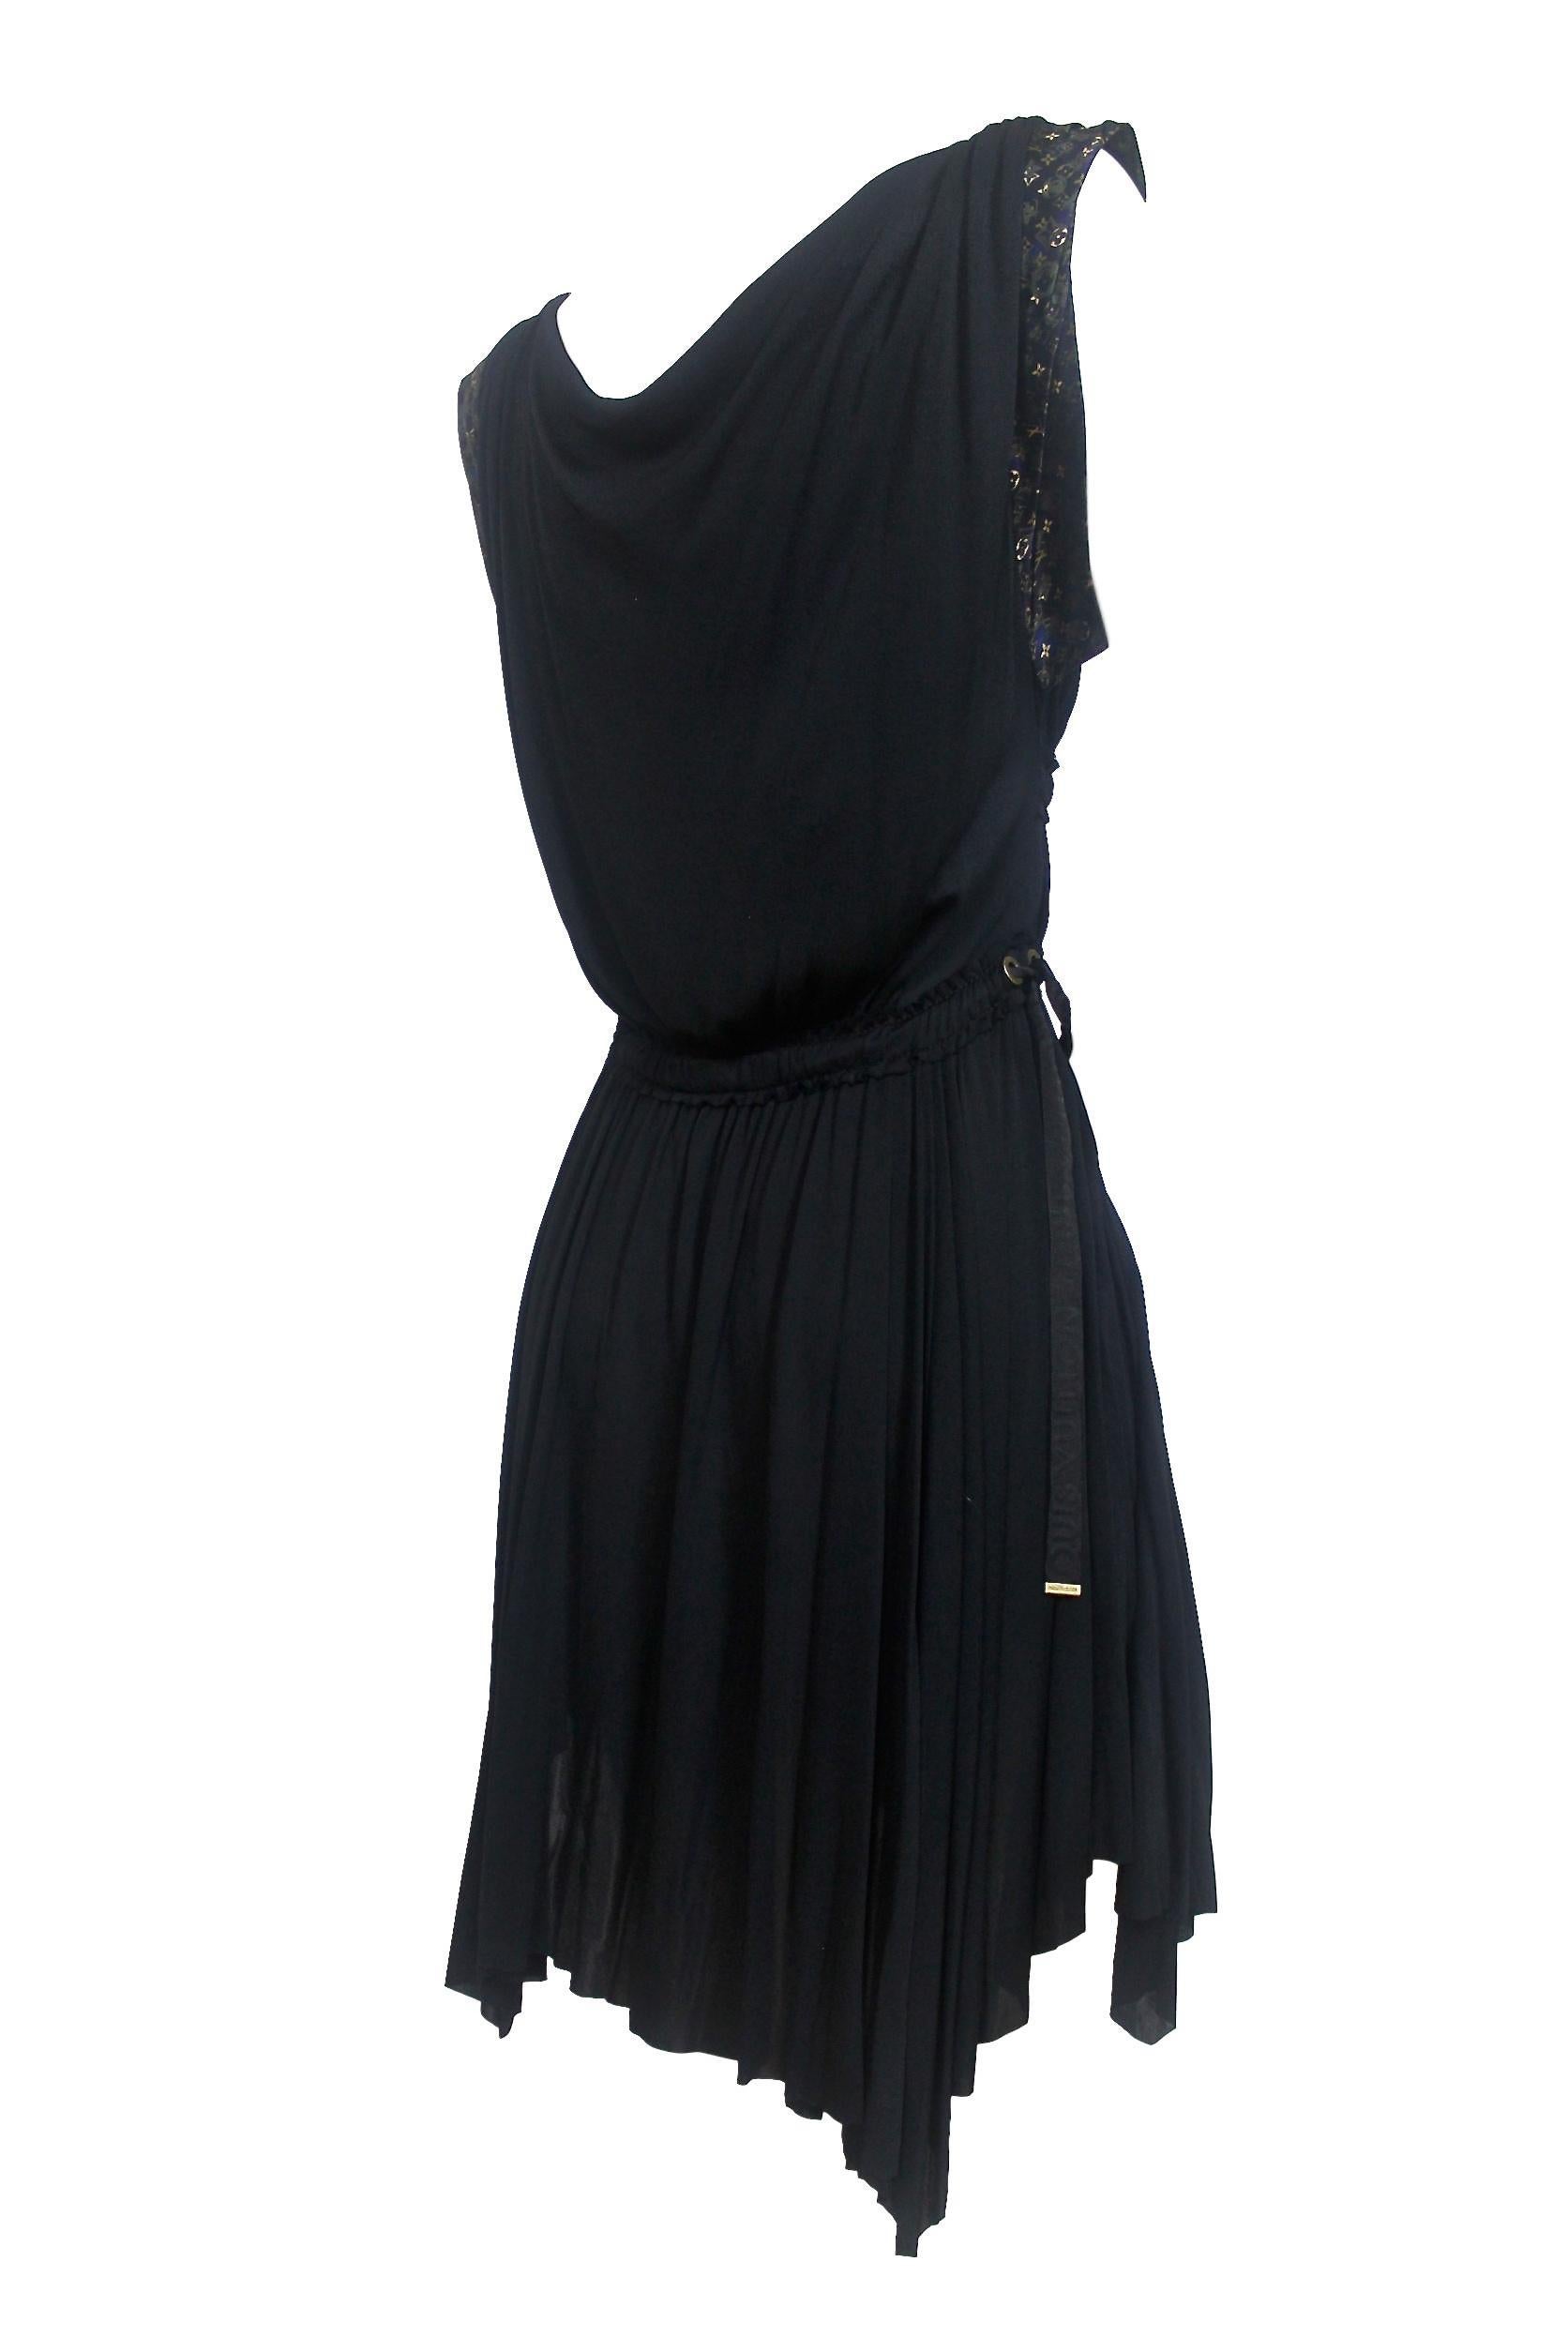 Louis Vuitton Grecian Style Dress For Sale 5